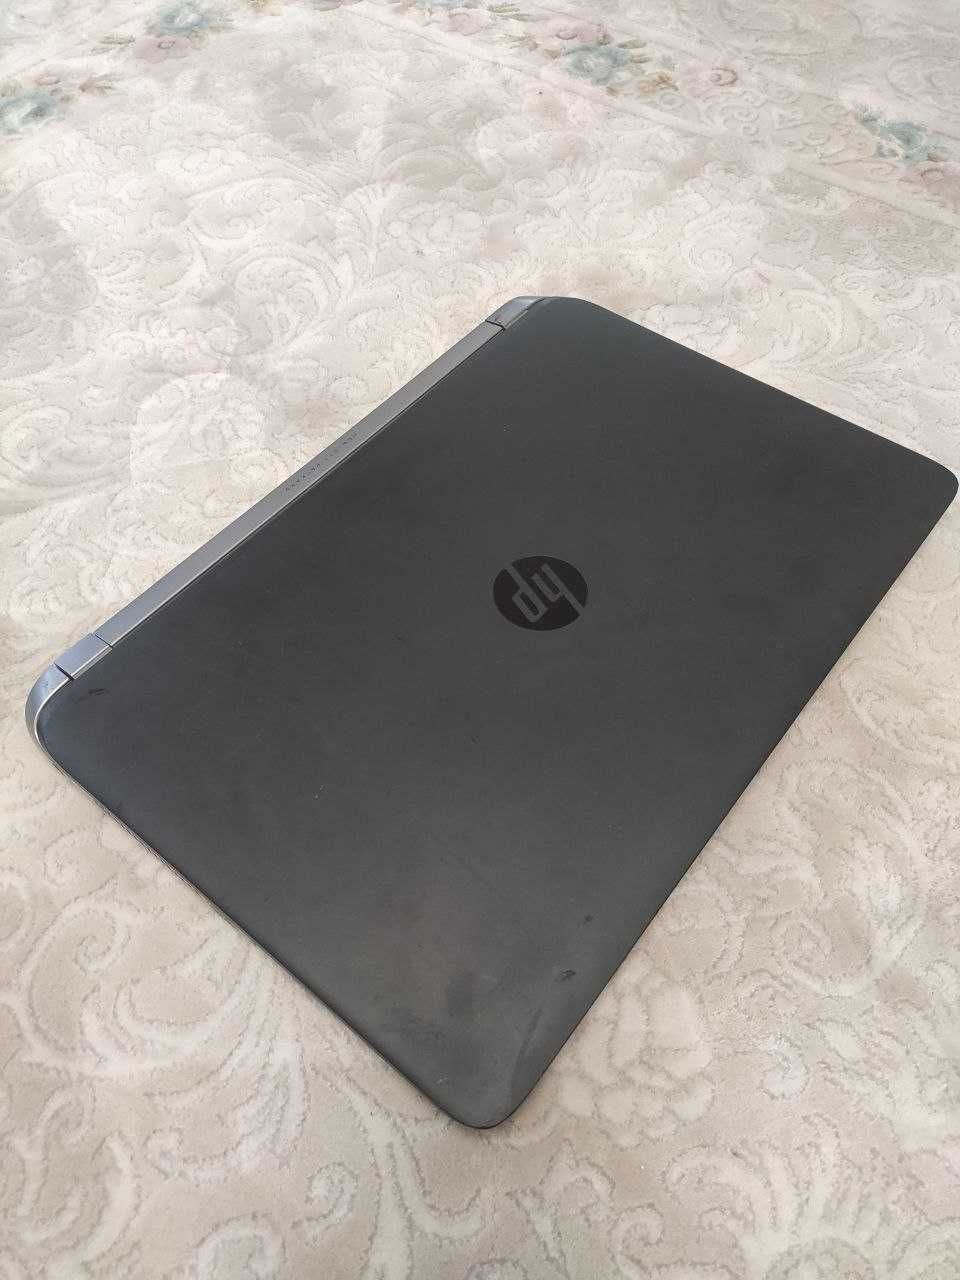 HP ProBook 455 G2 15.6" AMD A8-7100 / 8GB / 120GB SSD